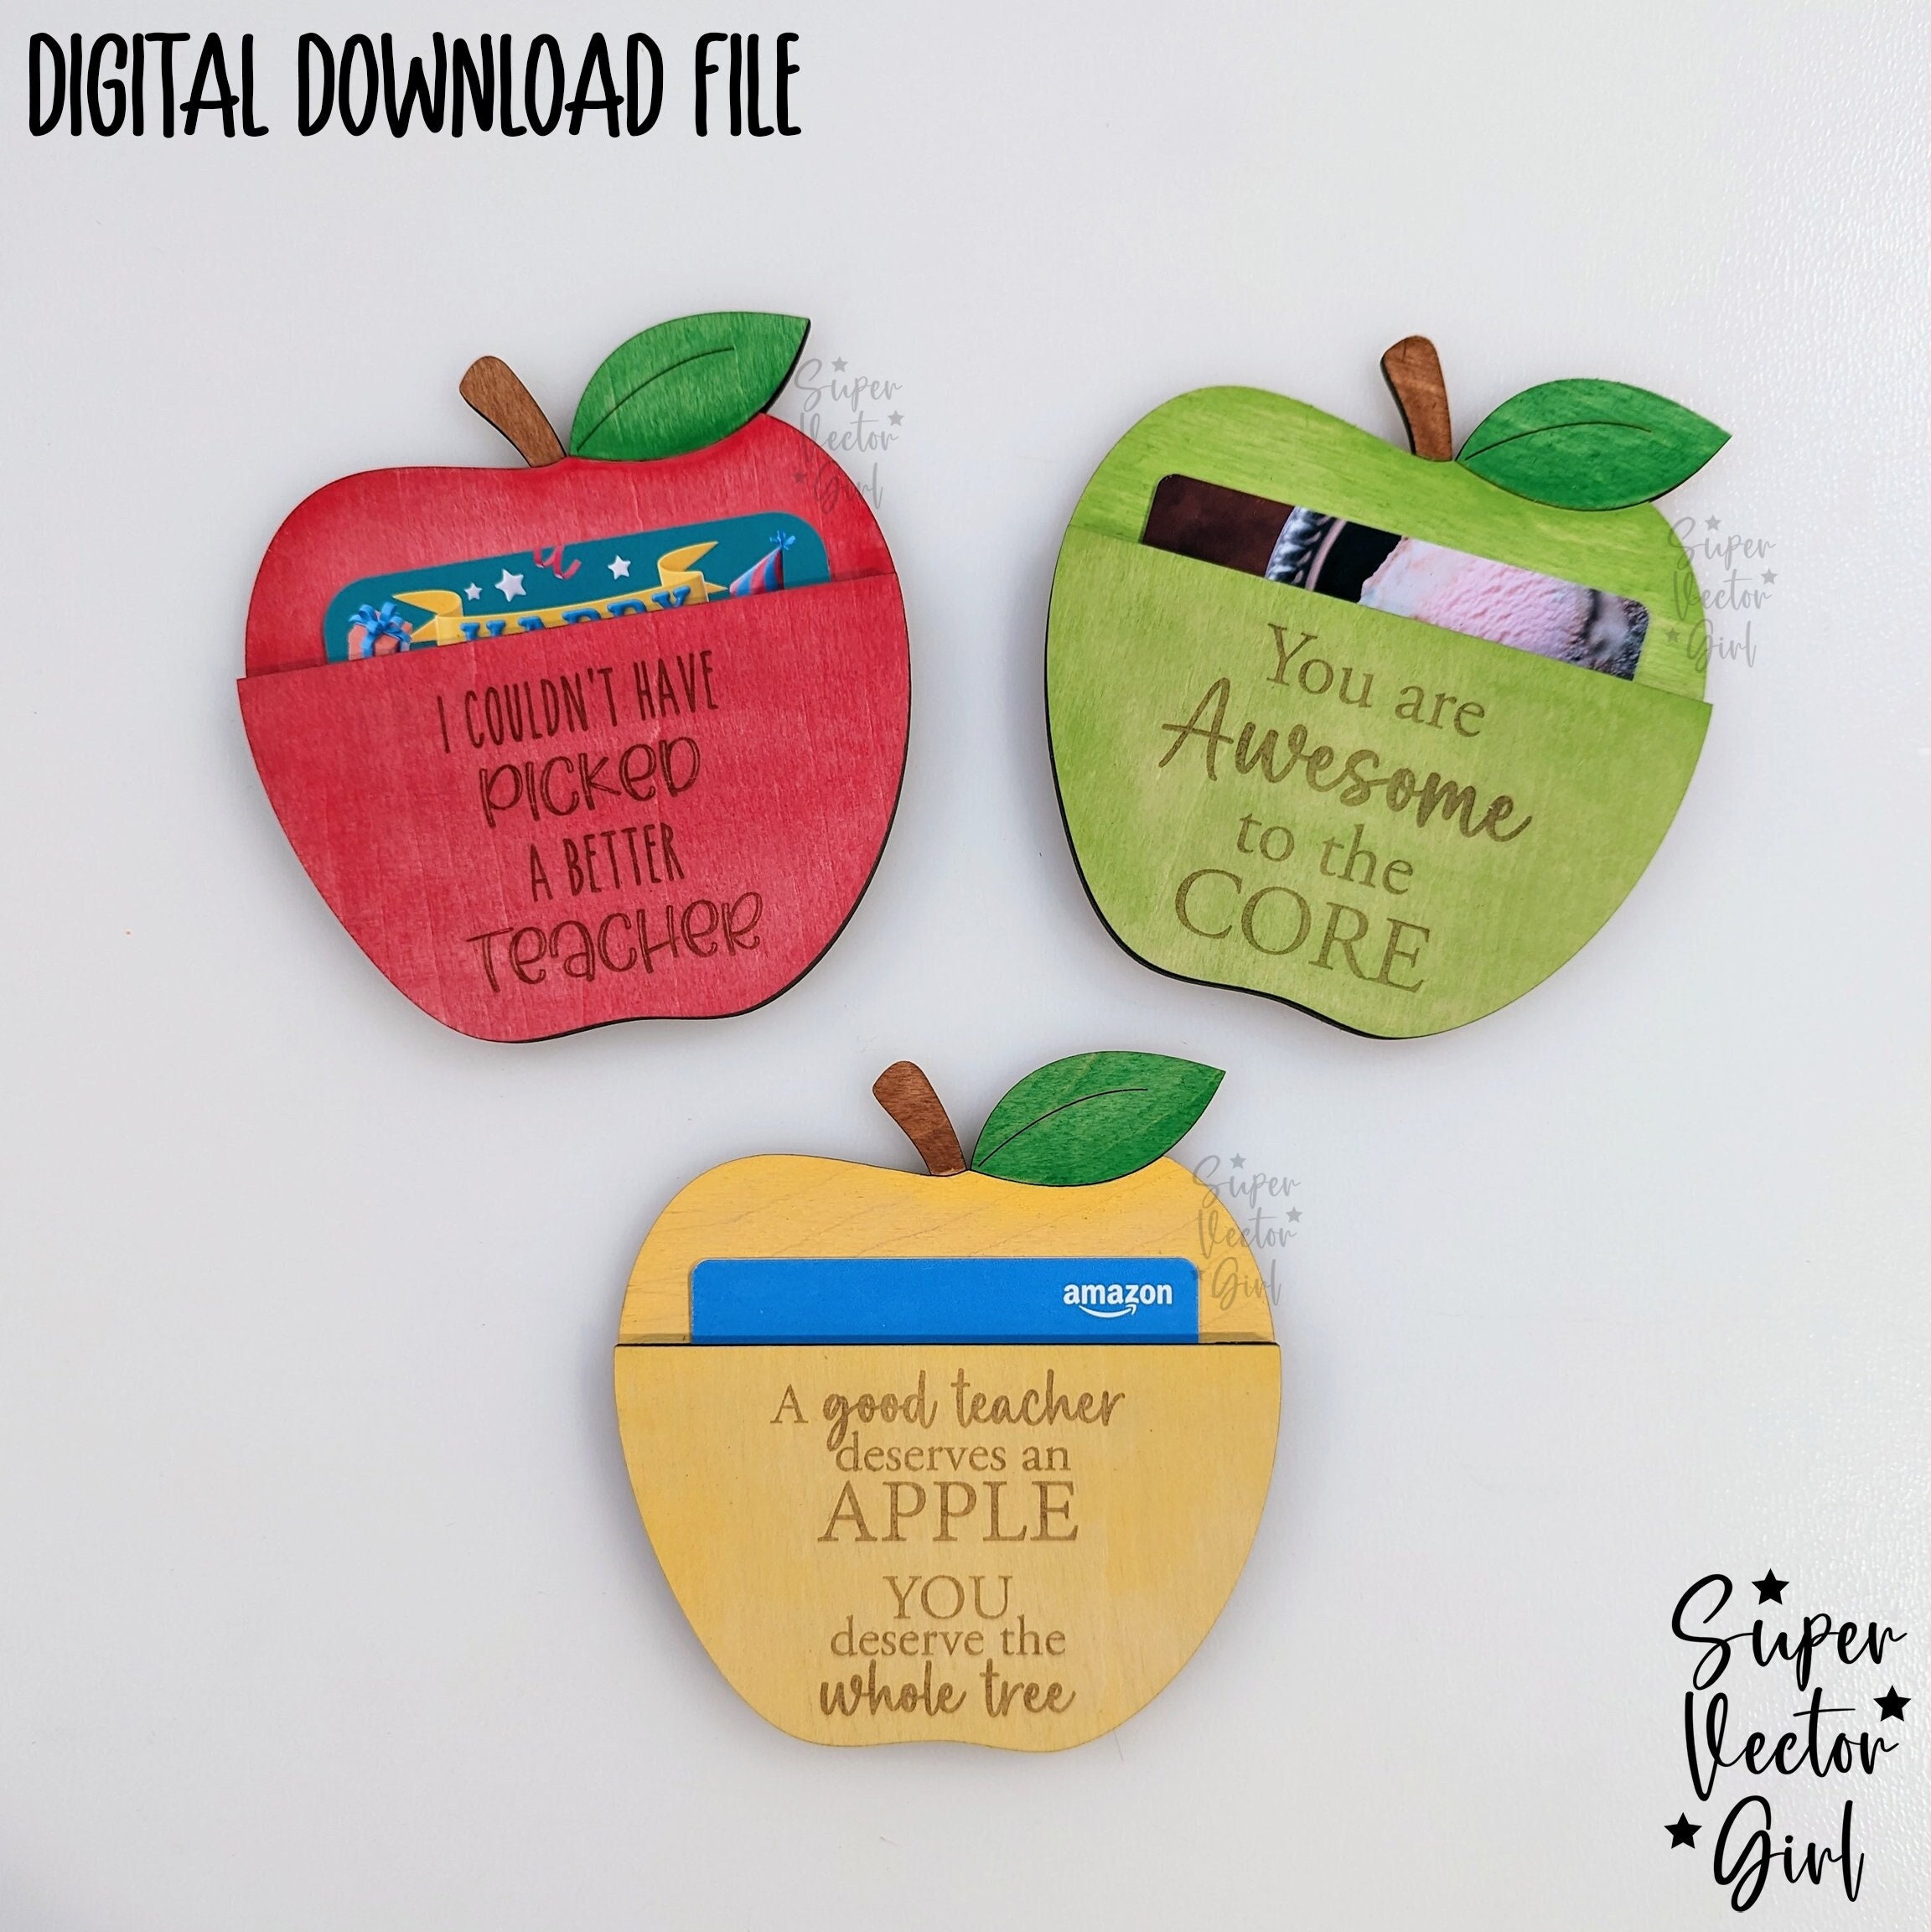 Buy Apple Gift Cards - Education - Apple (CA)